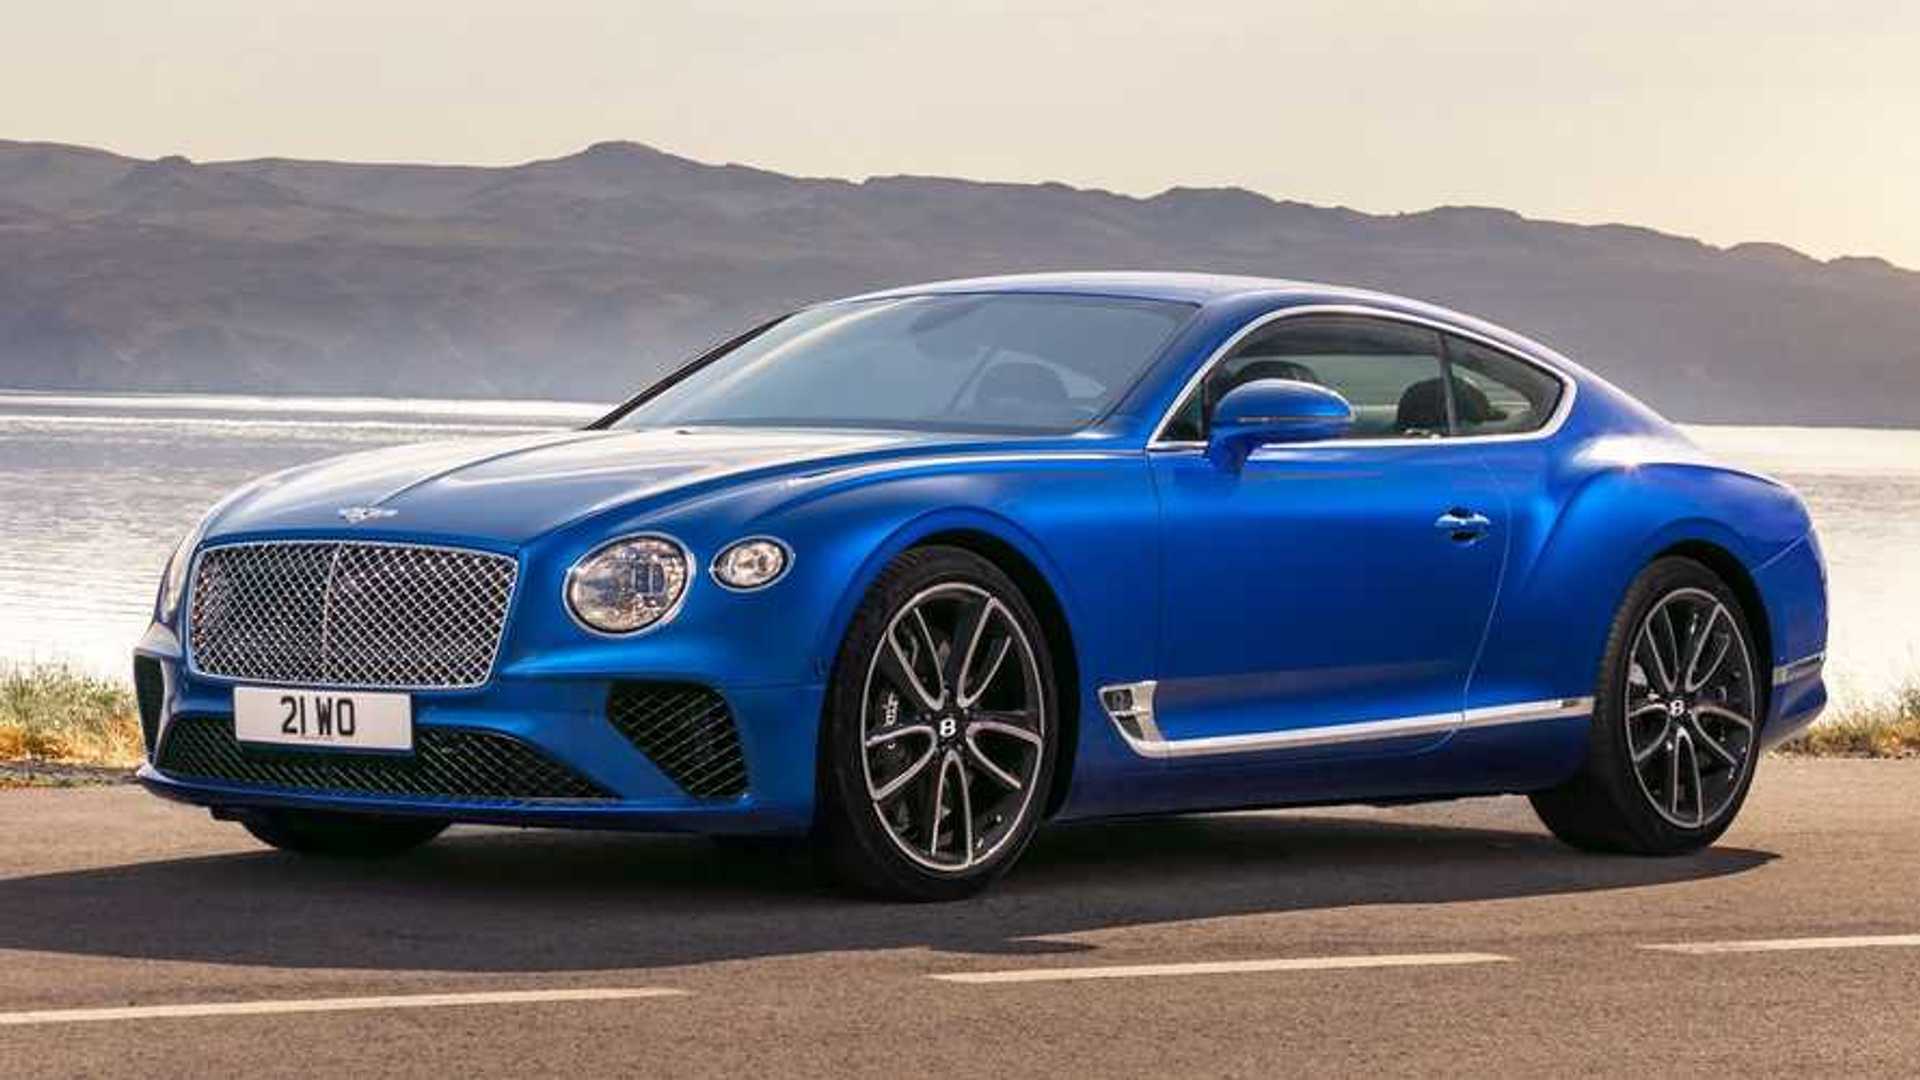 Bentley Continental GT News and Reviews | Motor1.com